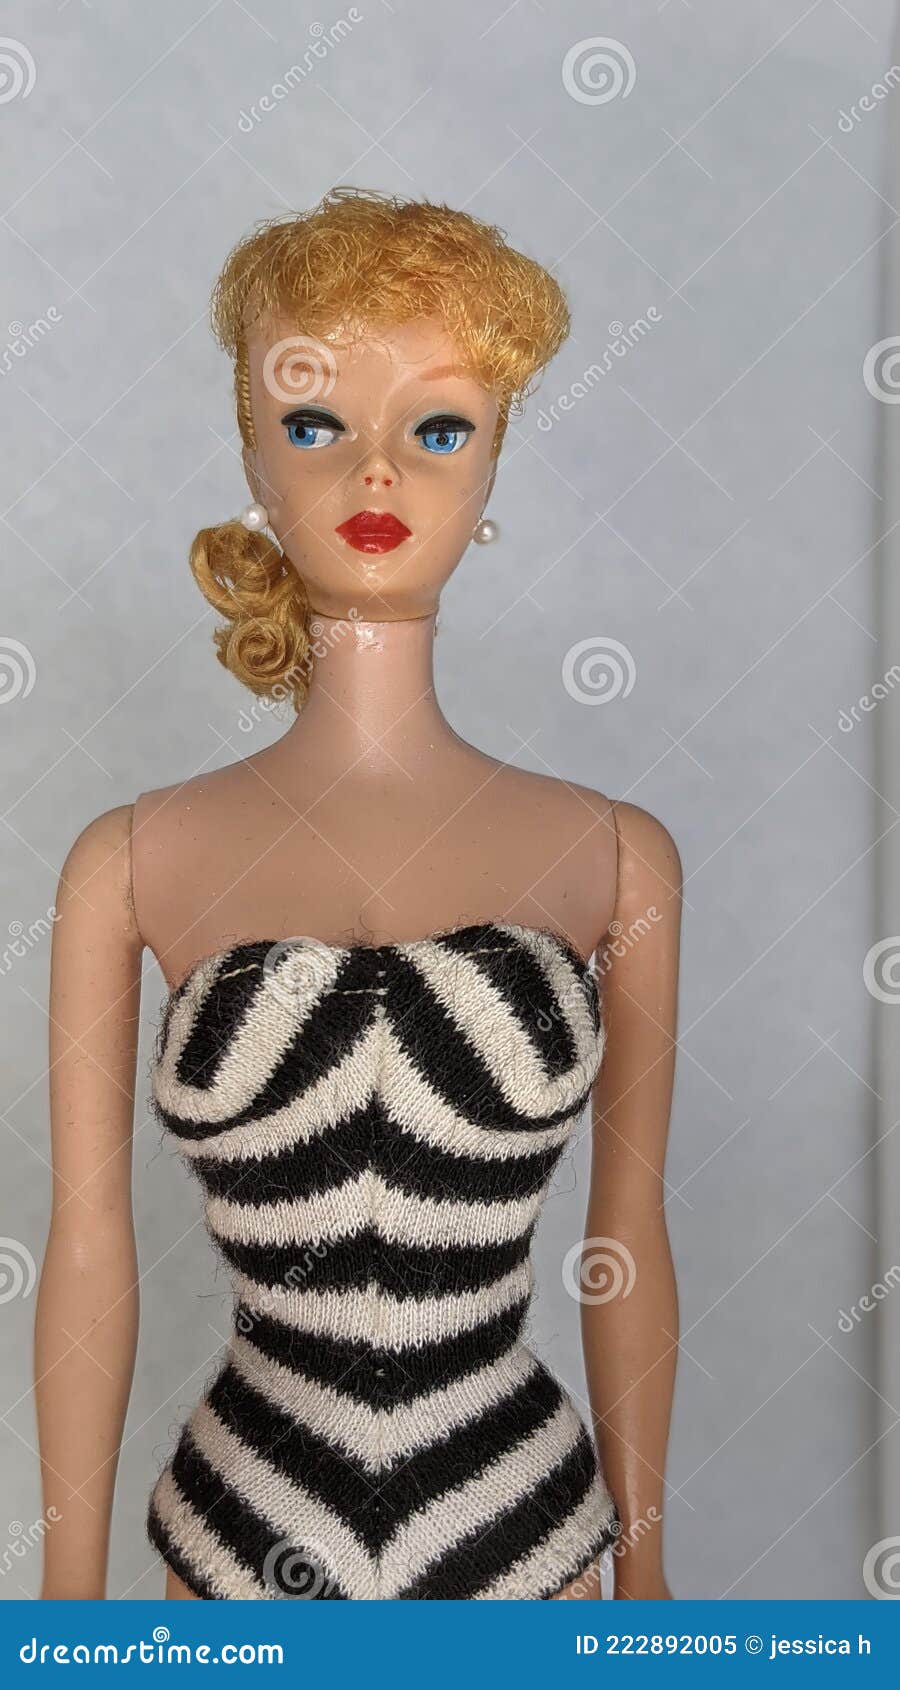 Barbie Vintage Con Traje De Baño a Rayas Imagen - Imagen de swimsuit, 222892005